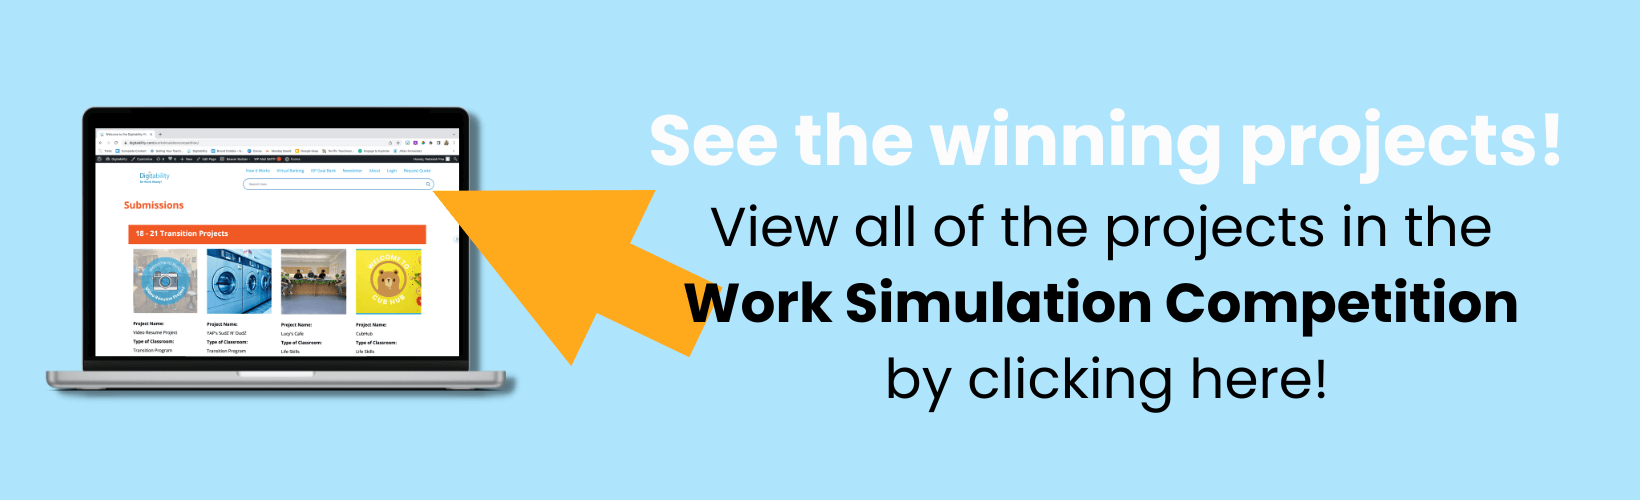 Work Simulation Gallery Button